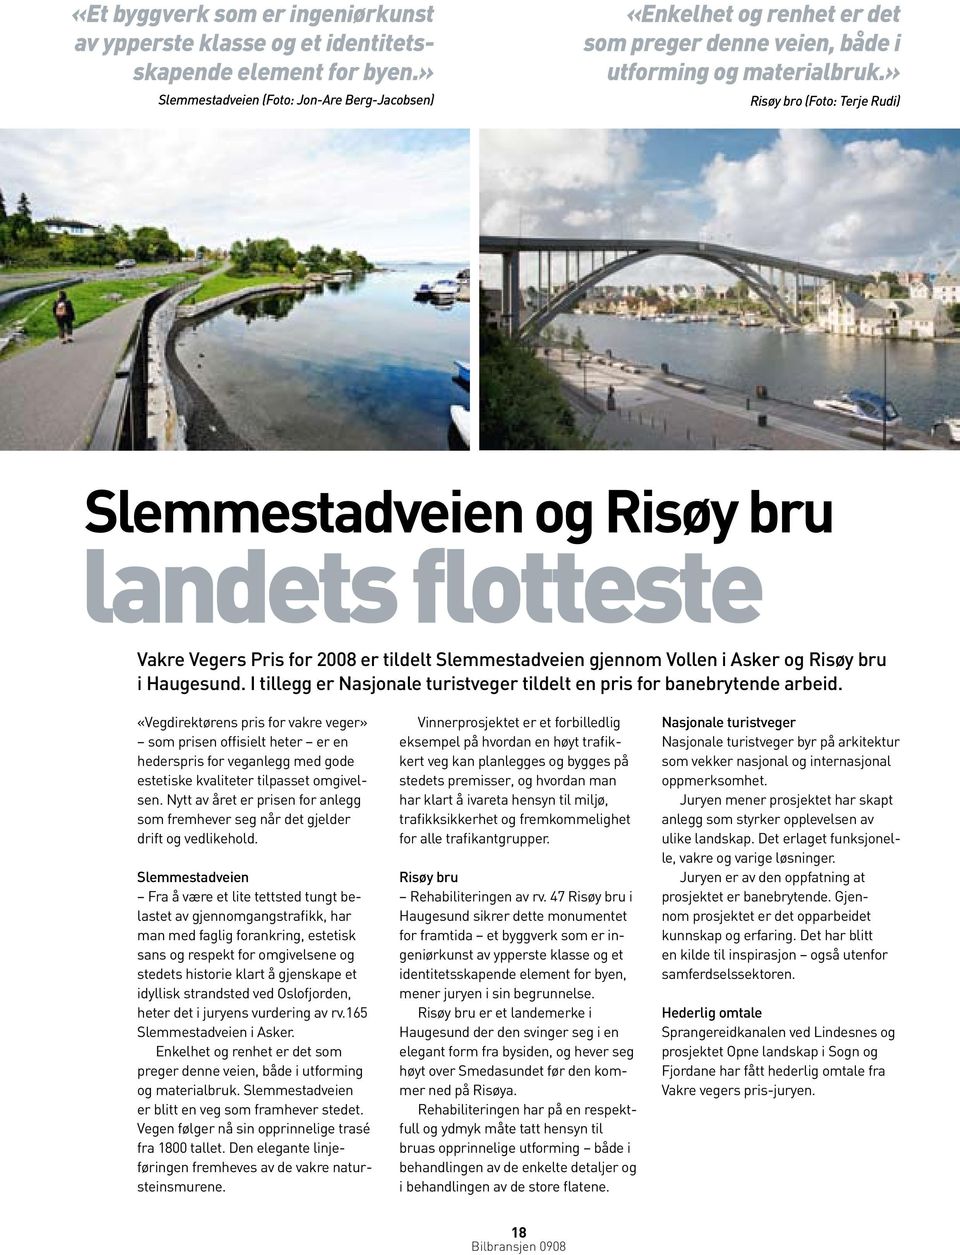 » Risøy bro (Foto: Terje Rudi) Slemmestadveien og Risøy bru landets flotteste Vakre Vegers Pris for 2008 er tildelt Slemmestadveien gjennom Vollen i Asker og Risøy bru i Haugesund.